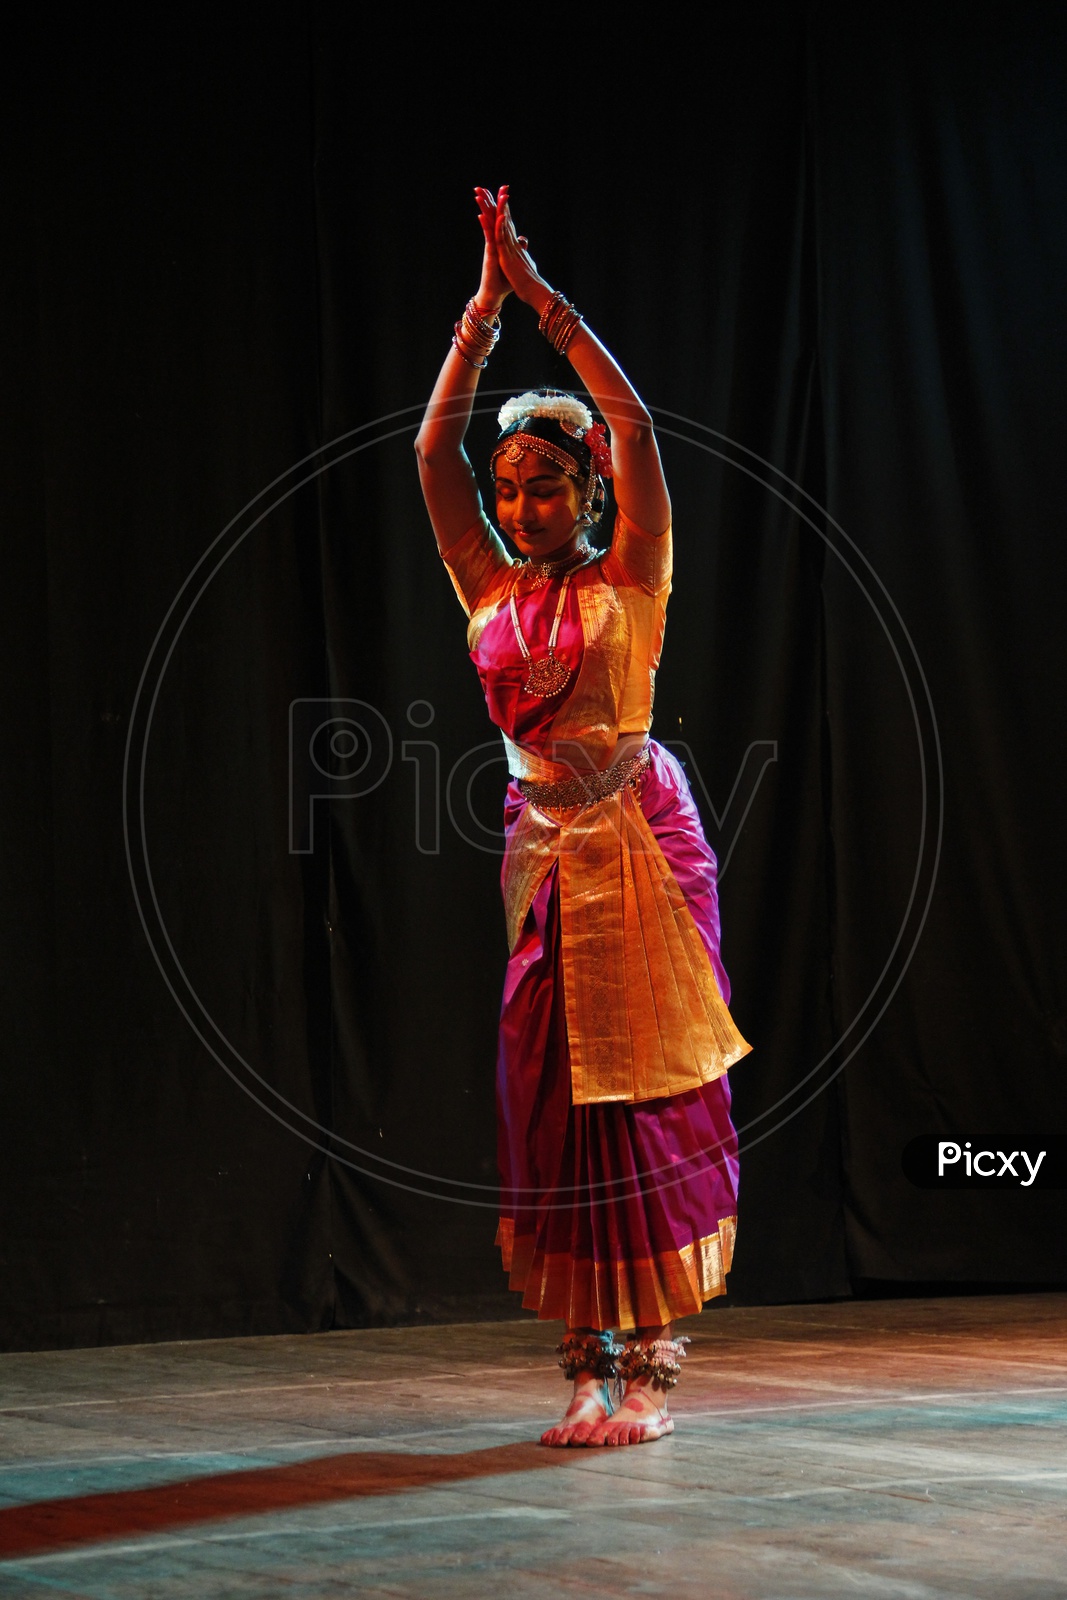 Indian Classical Dancer Posture of a Classical Dance Art Form